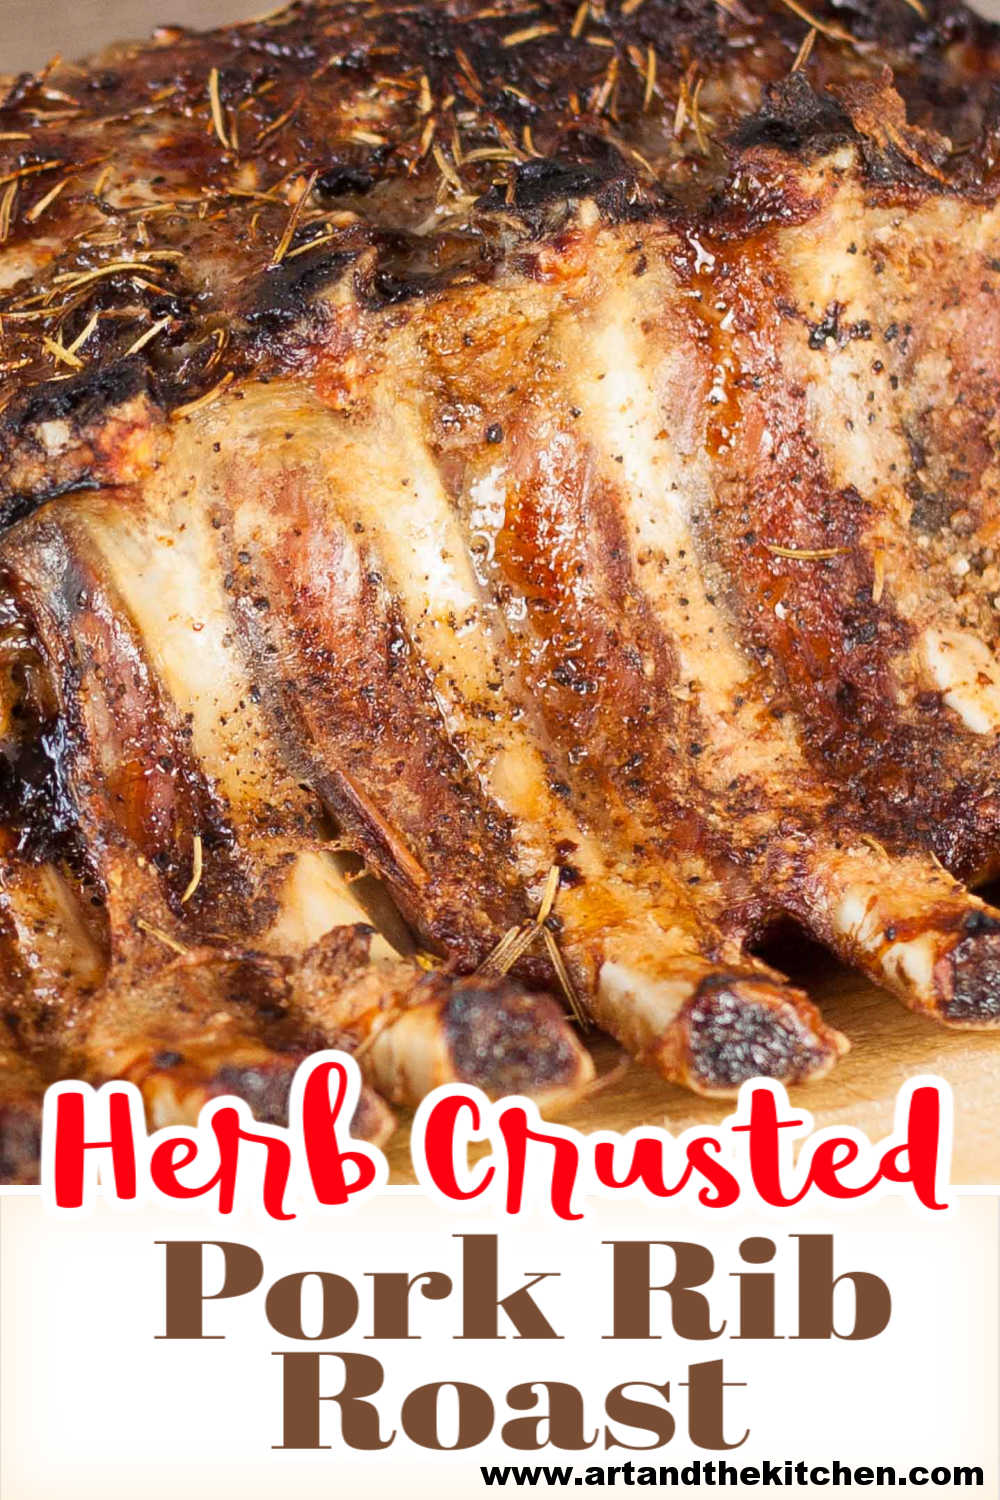 Herb Crusted Pork Rib Roast is an easy recipe. Oven-roasted to make tender and juicy pork. via @artandthekitch